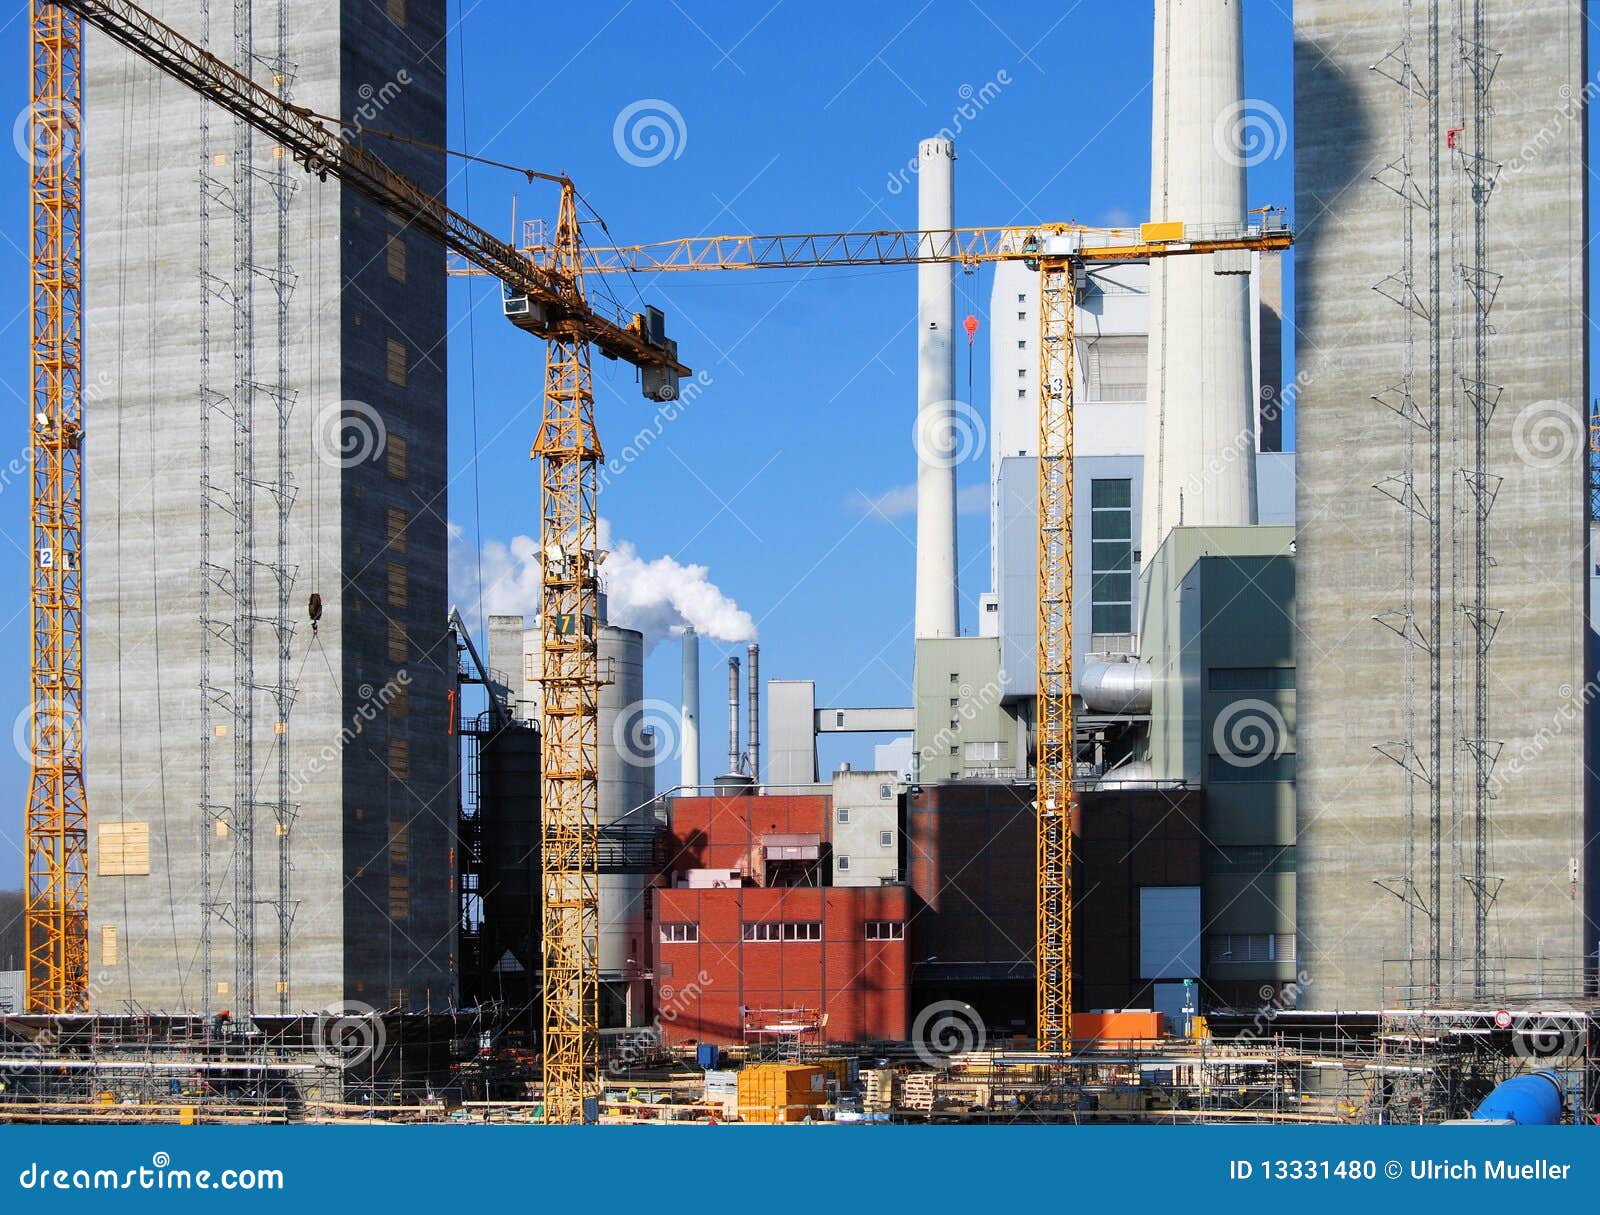 Power Plant Construction Site Stock Photo - Image: 13331480